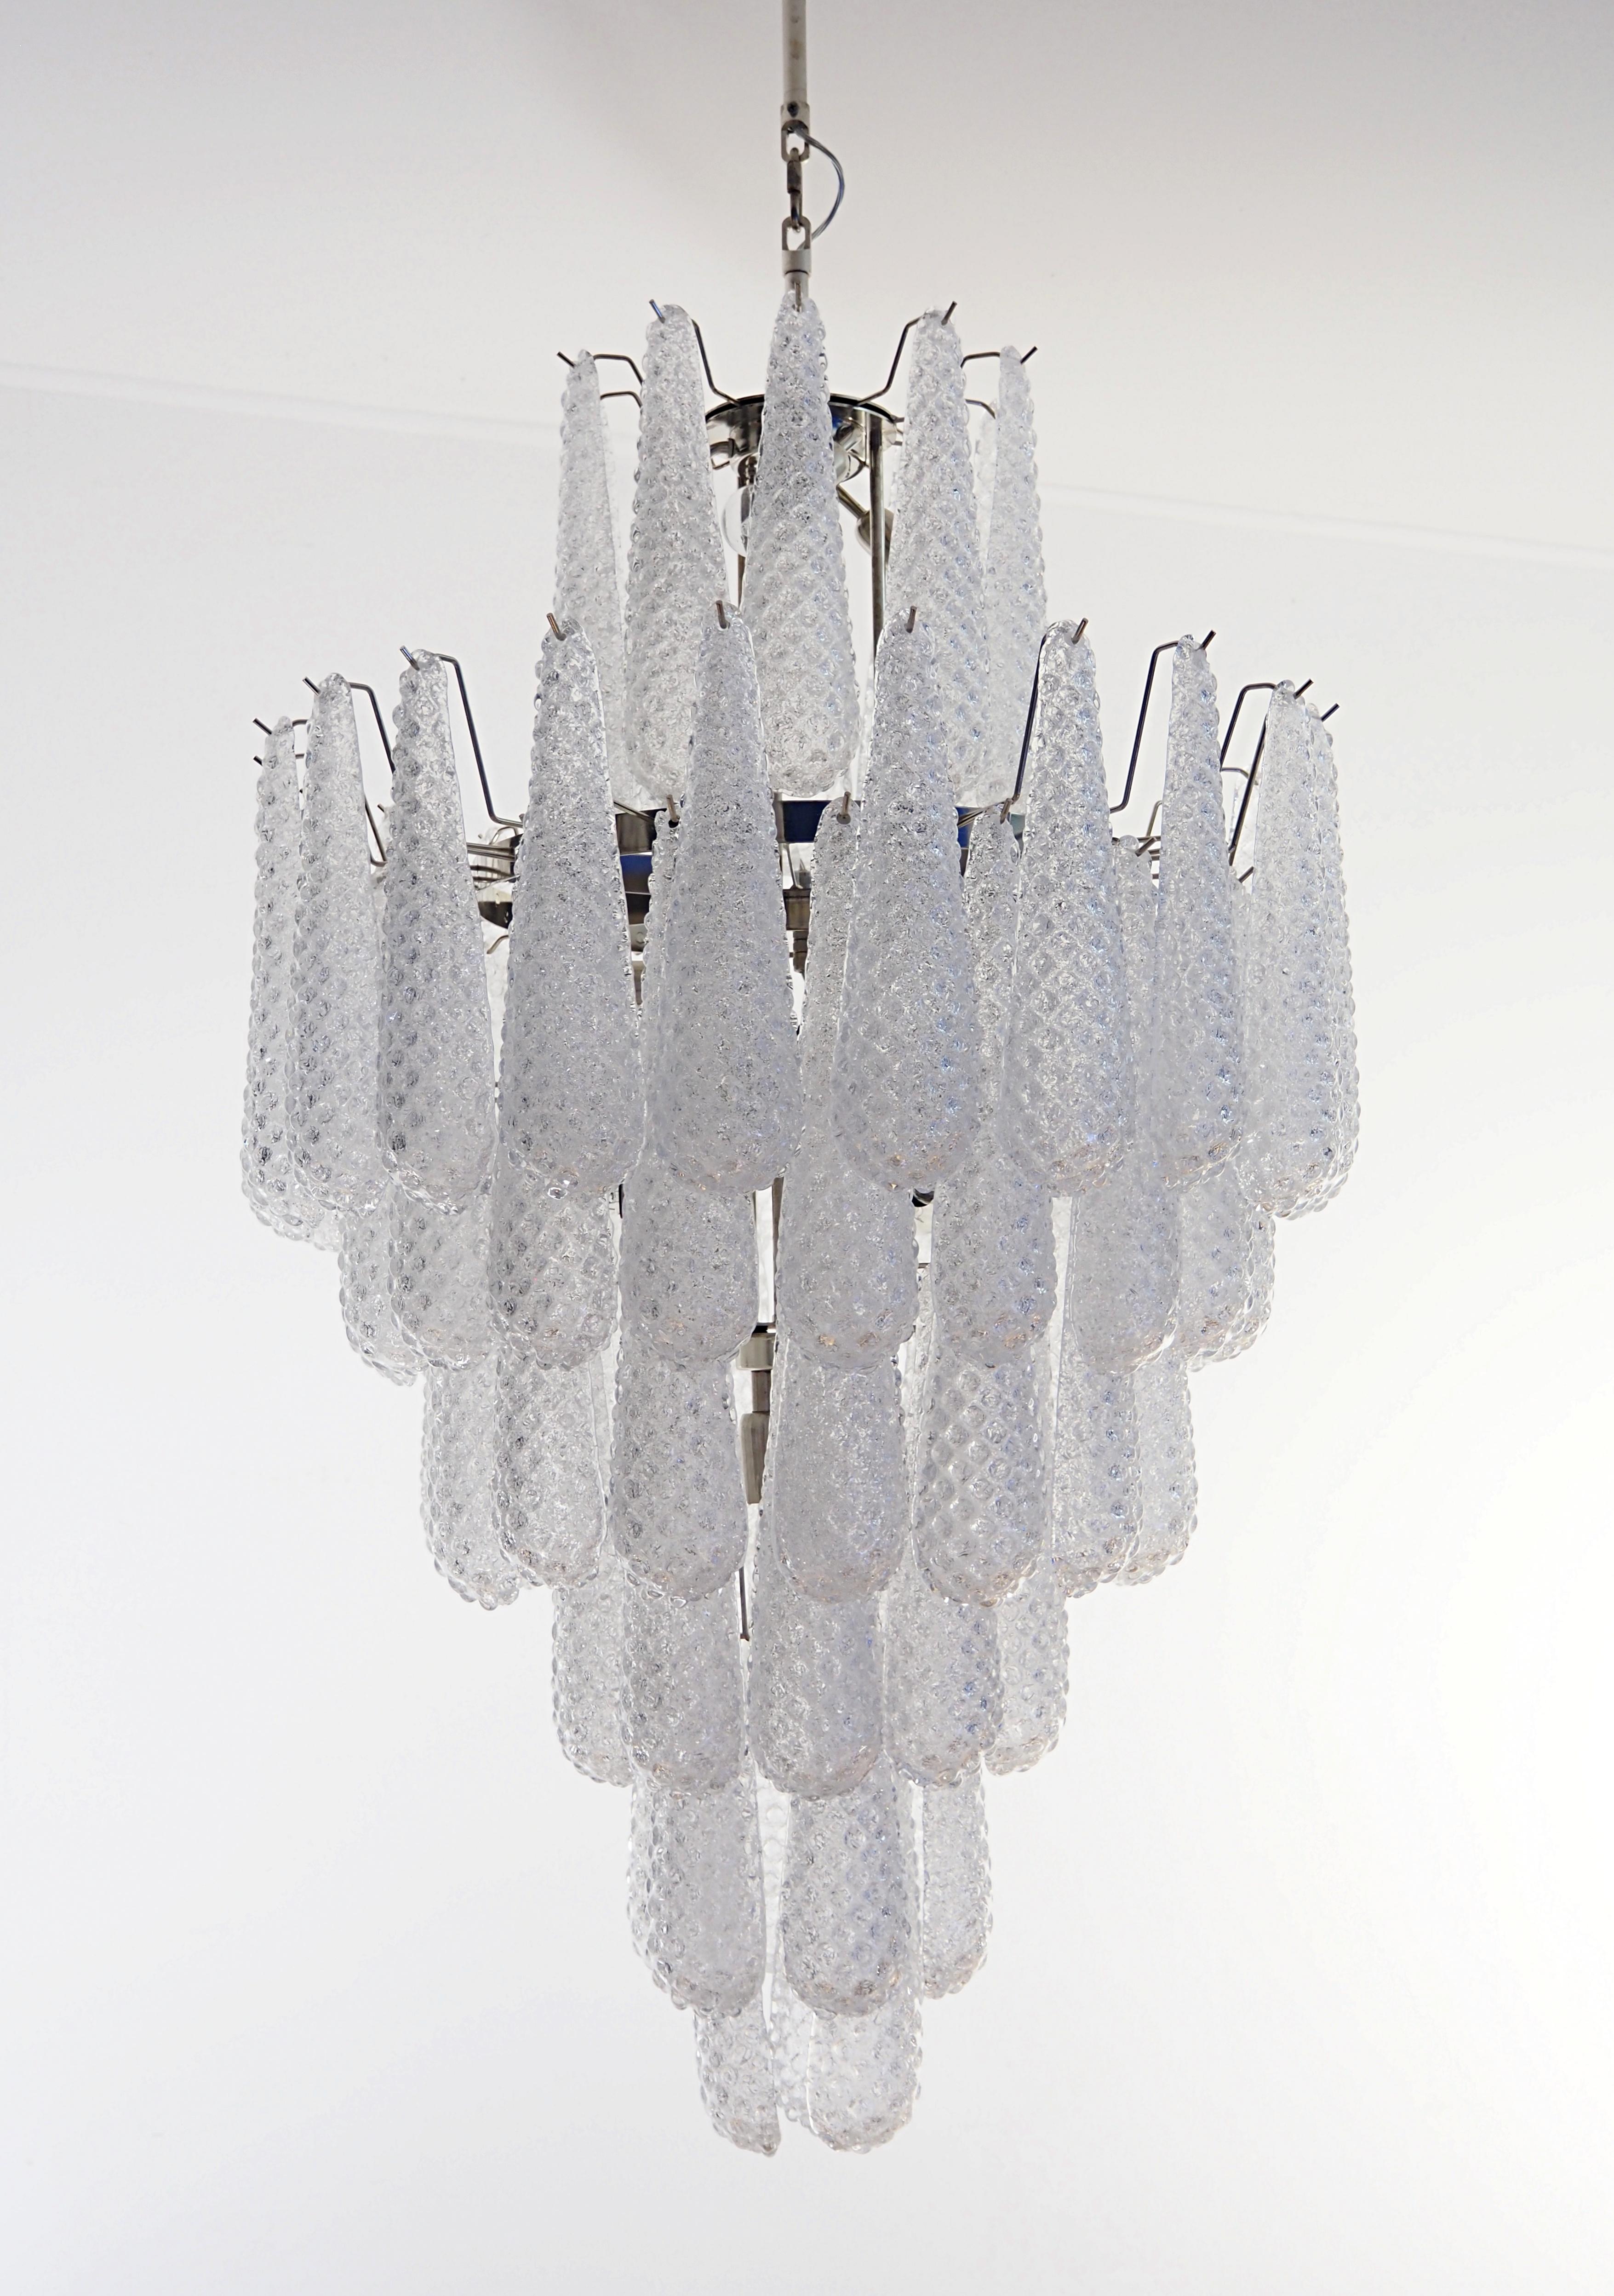 Huge Italian vintage Murano glass chandelier - 85 glass transparent petals drop For Sale 9